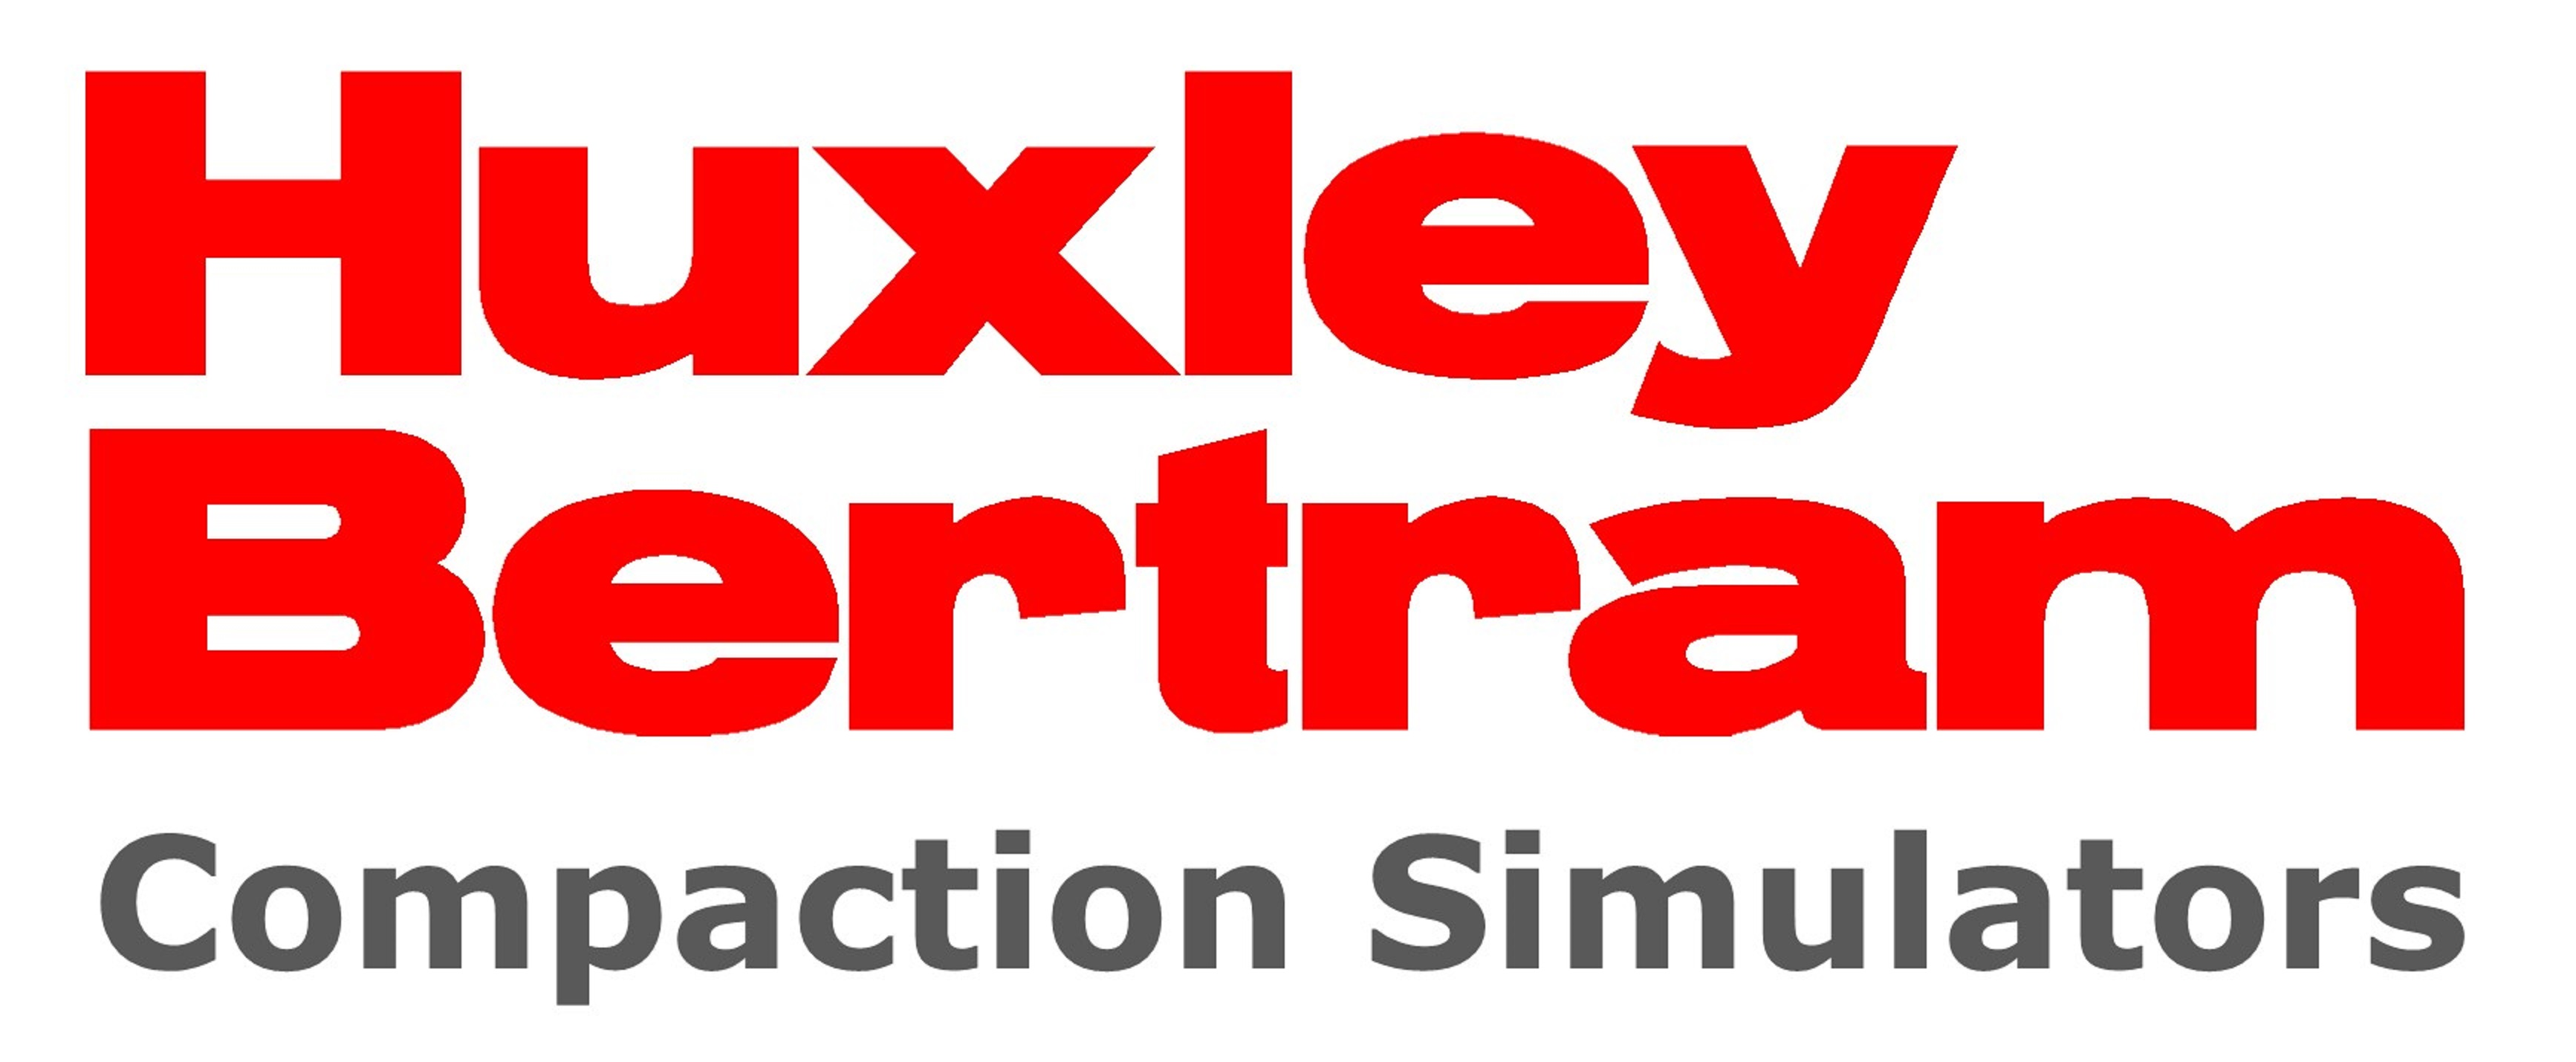 Huxley Bertram HB10 Versatile R&D Tablet Press